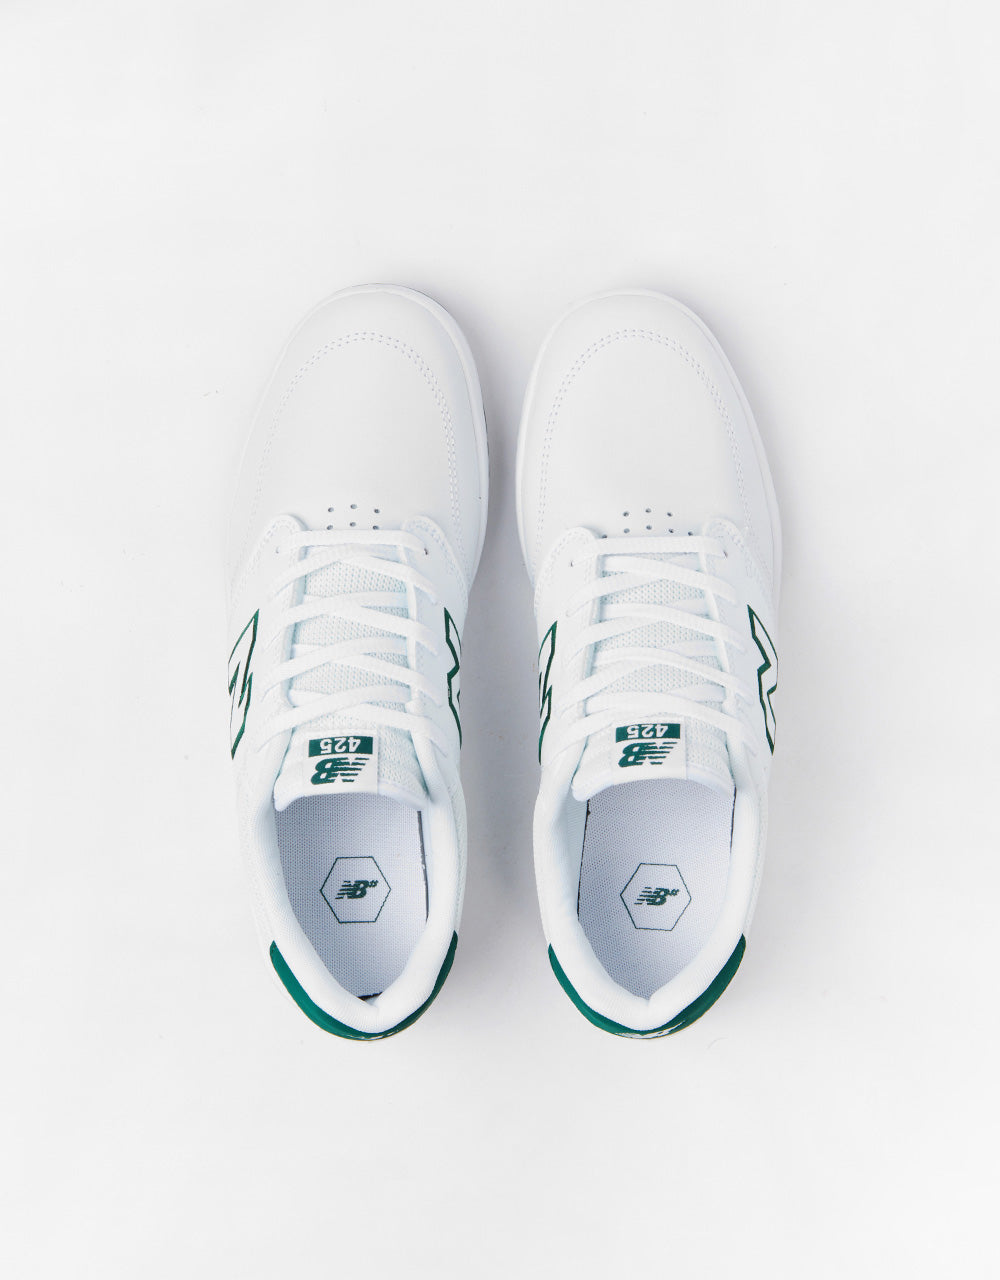 New Balance Numeric 425 Skate Shoes - White/Green